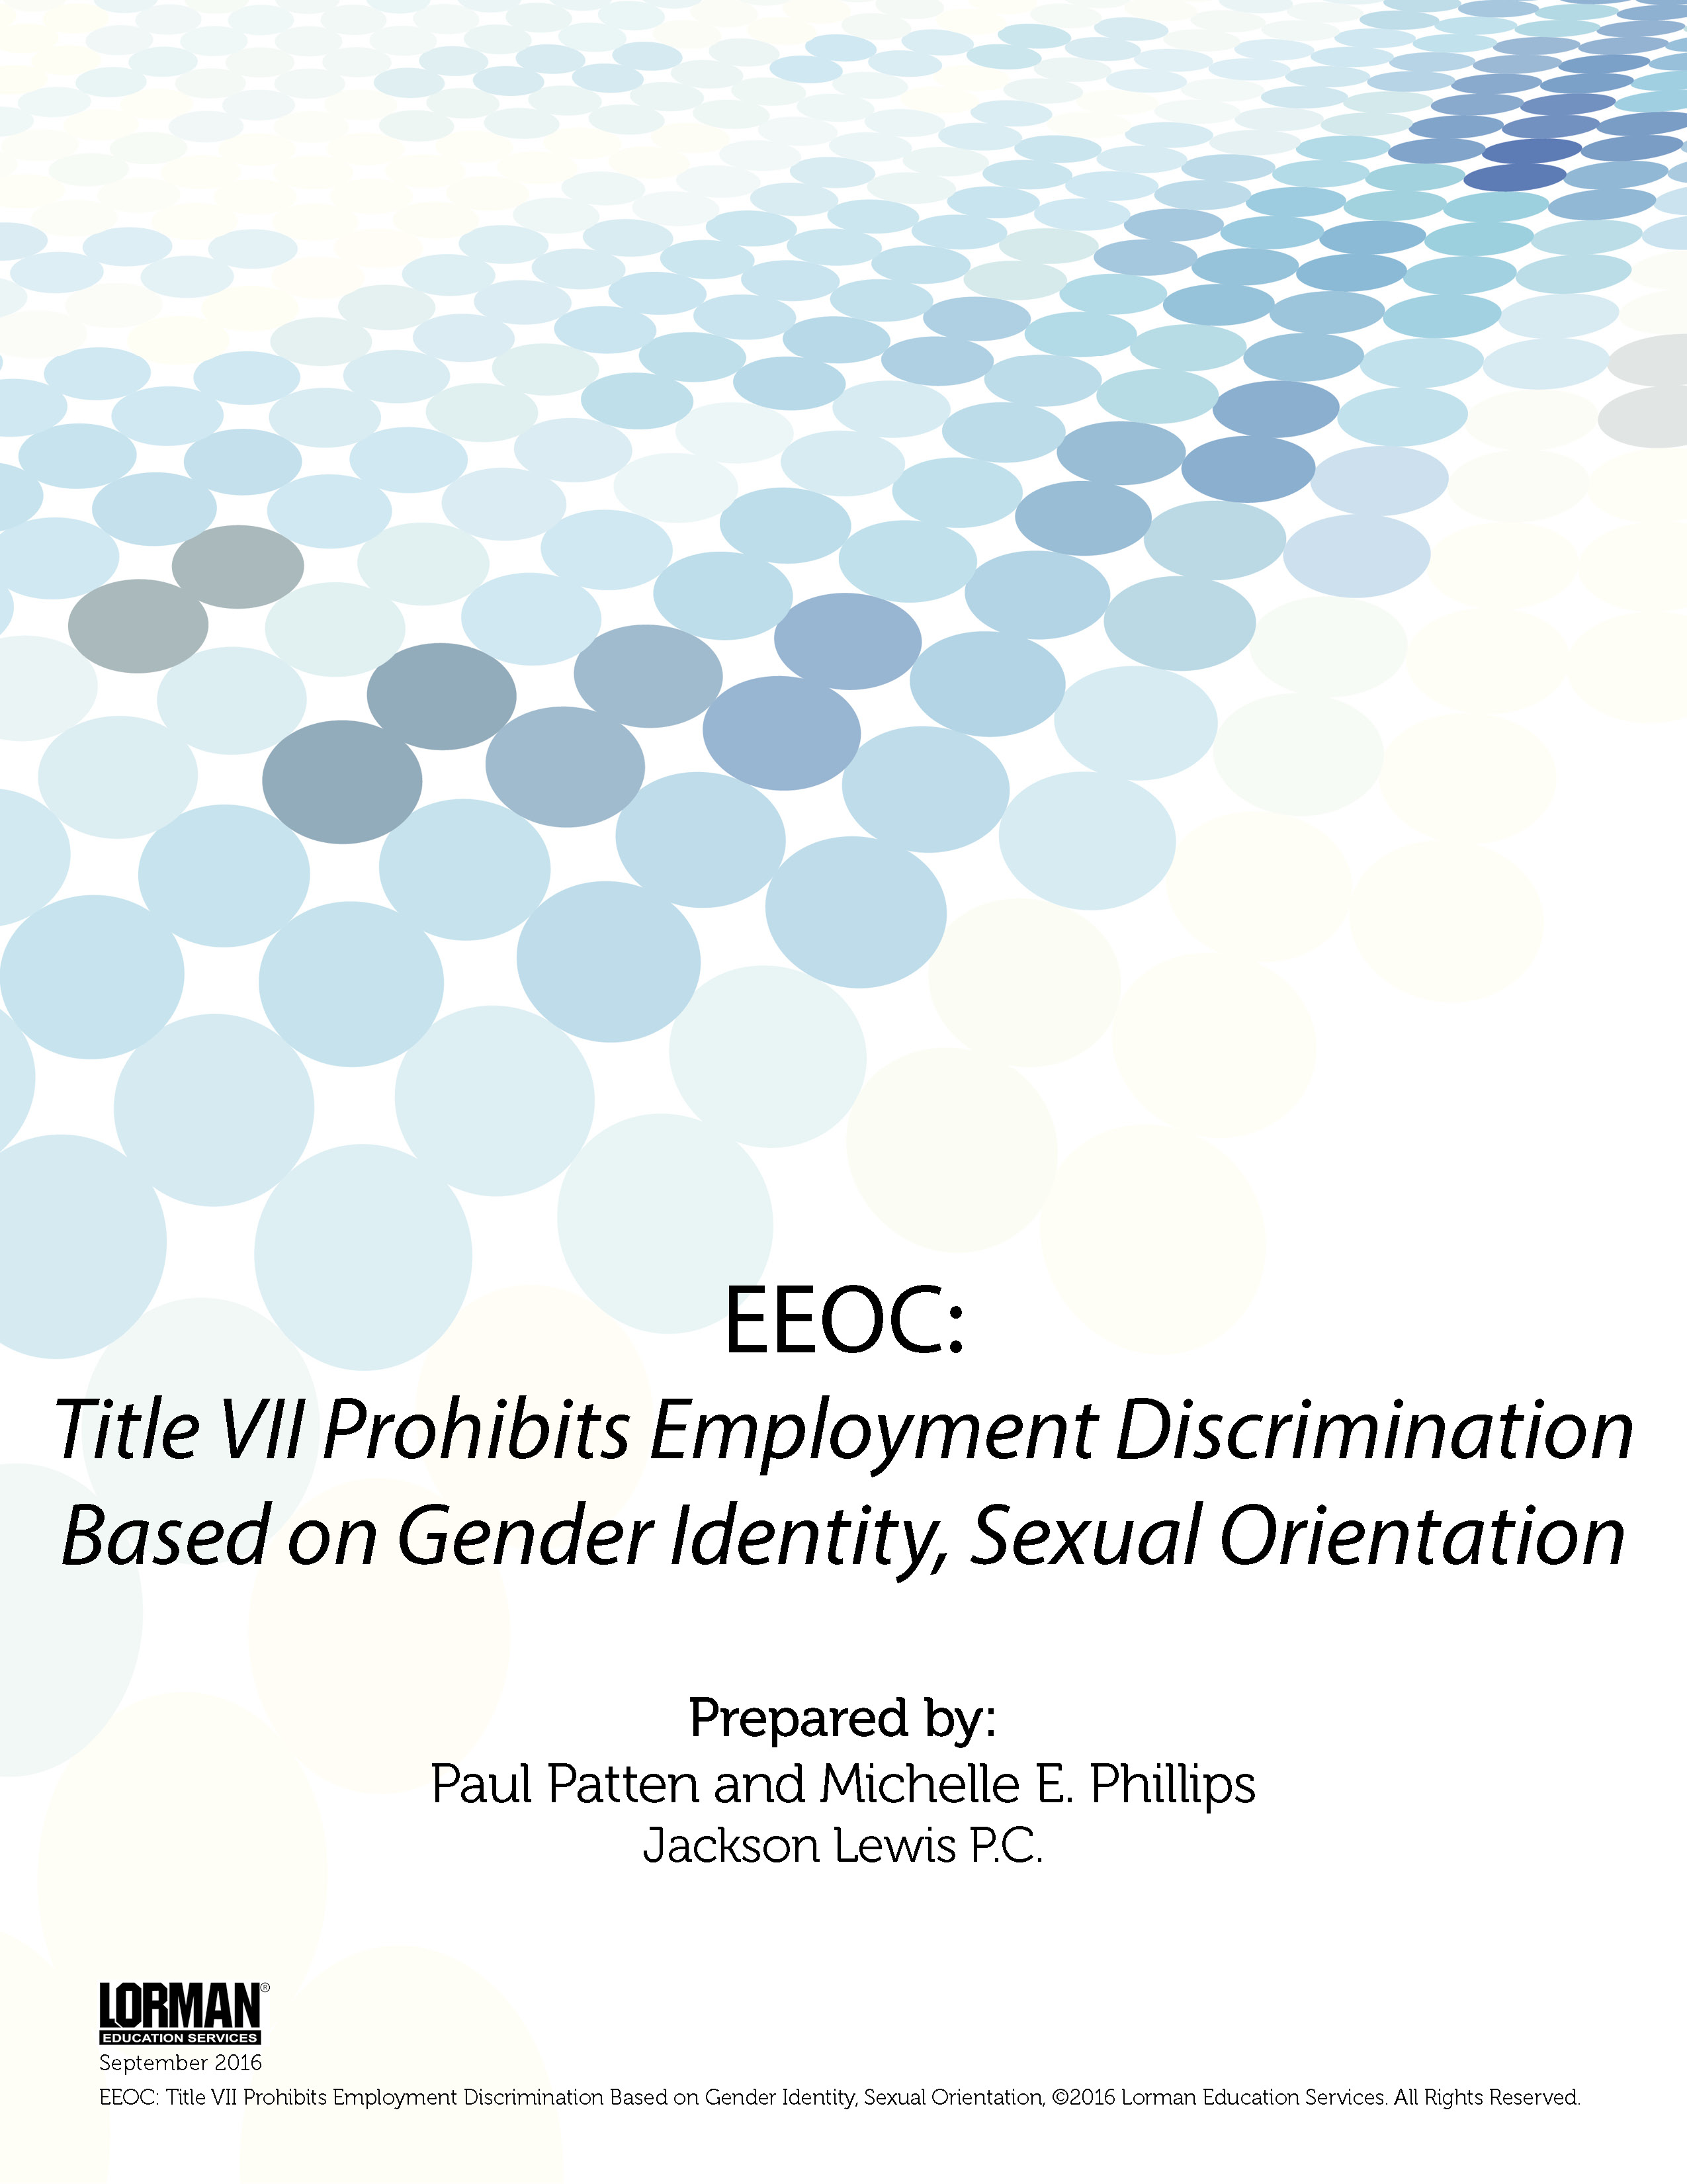 EEOC - Title VII Prohibits Employment Discrimination Based on Gender Identity, Sexual Orientation